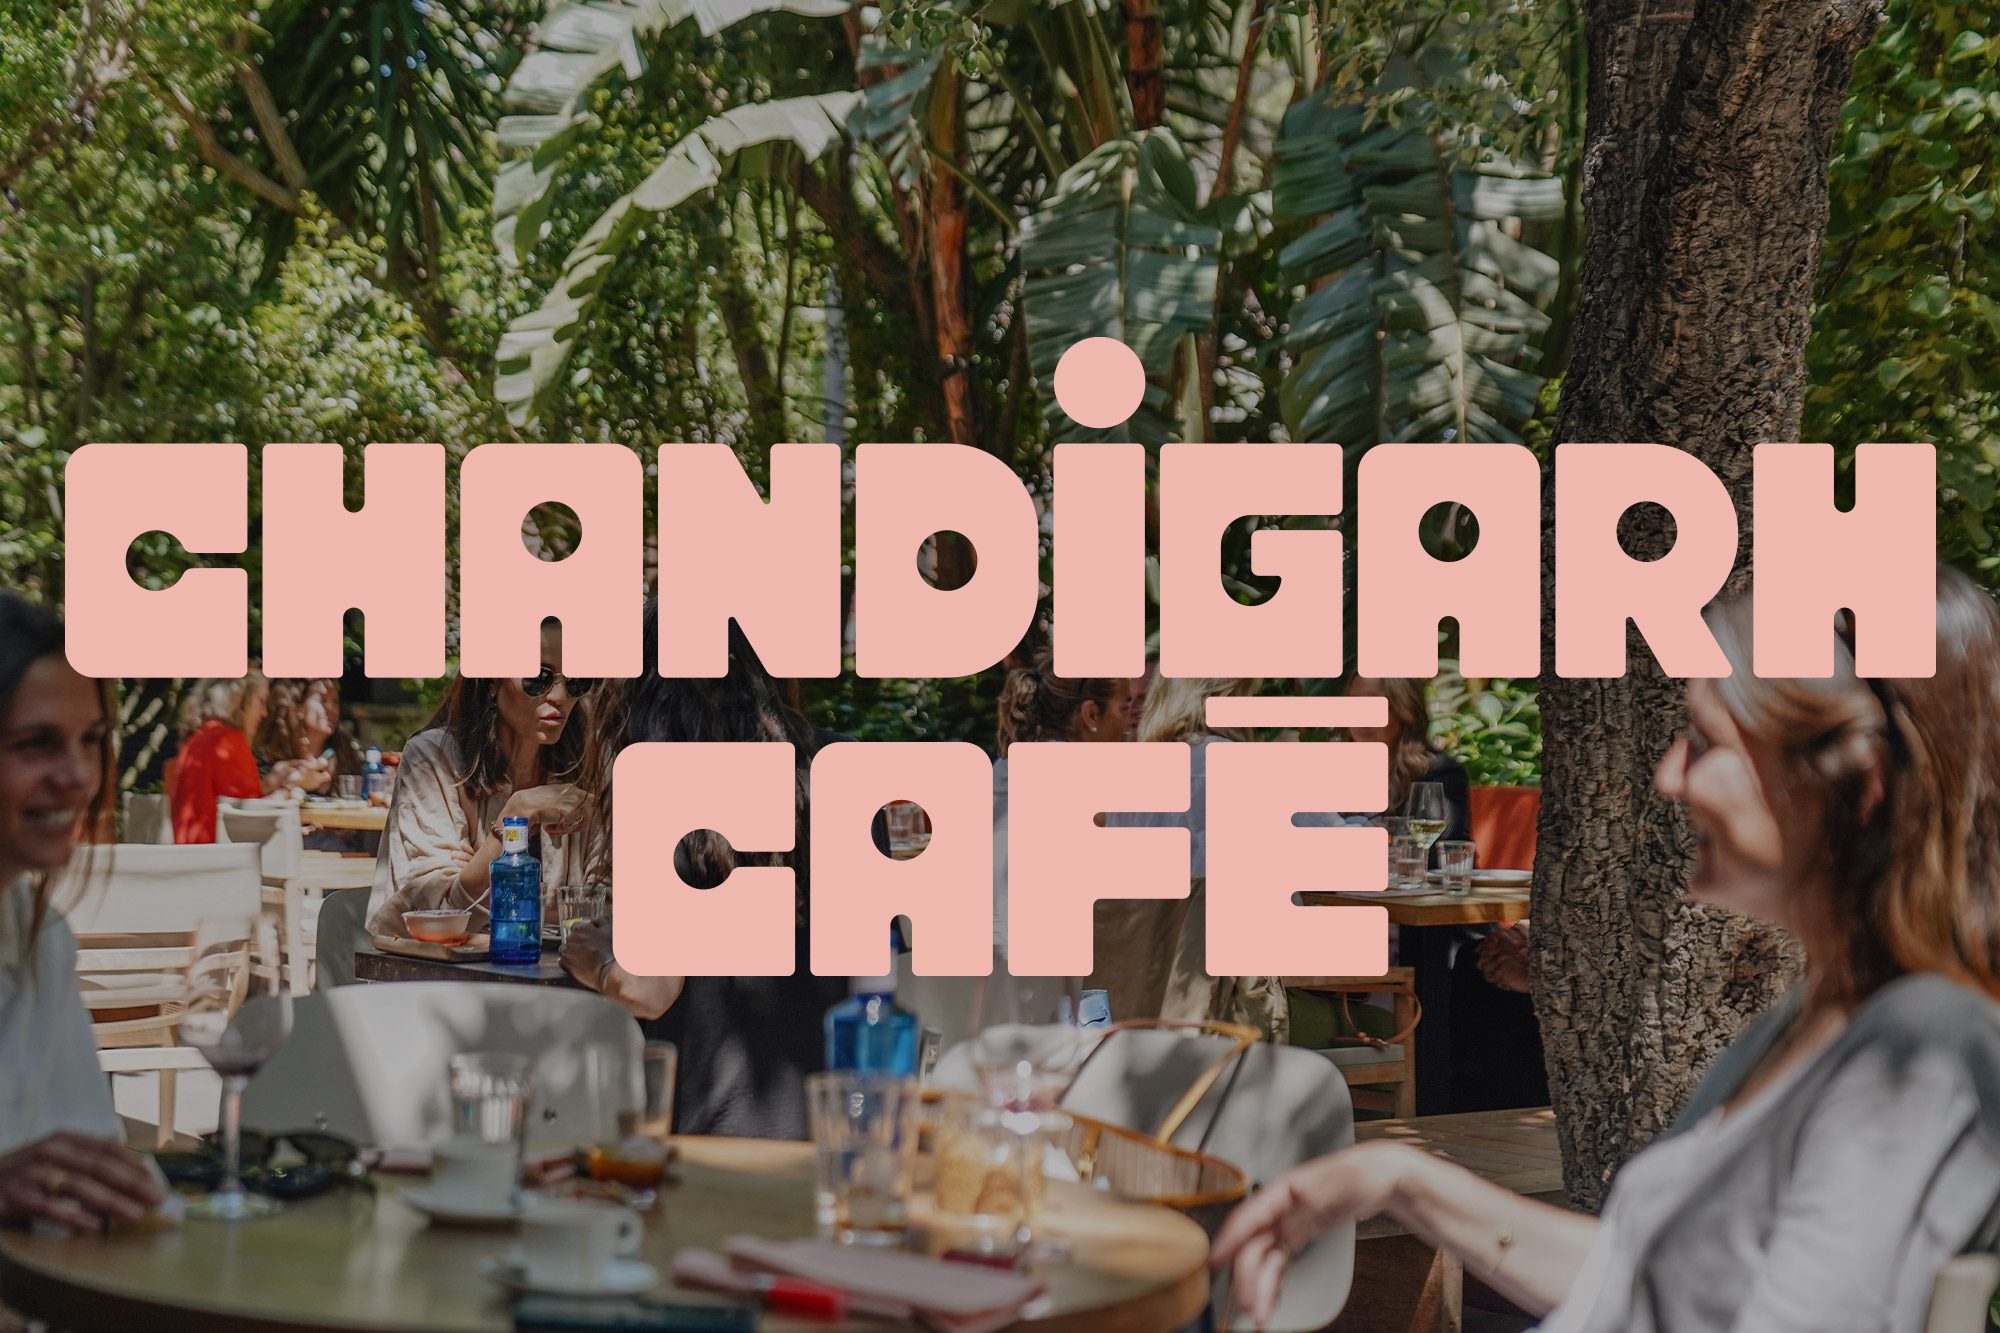 Chandigarh Café